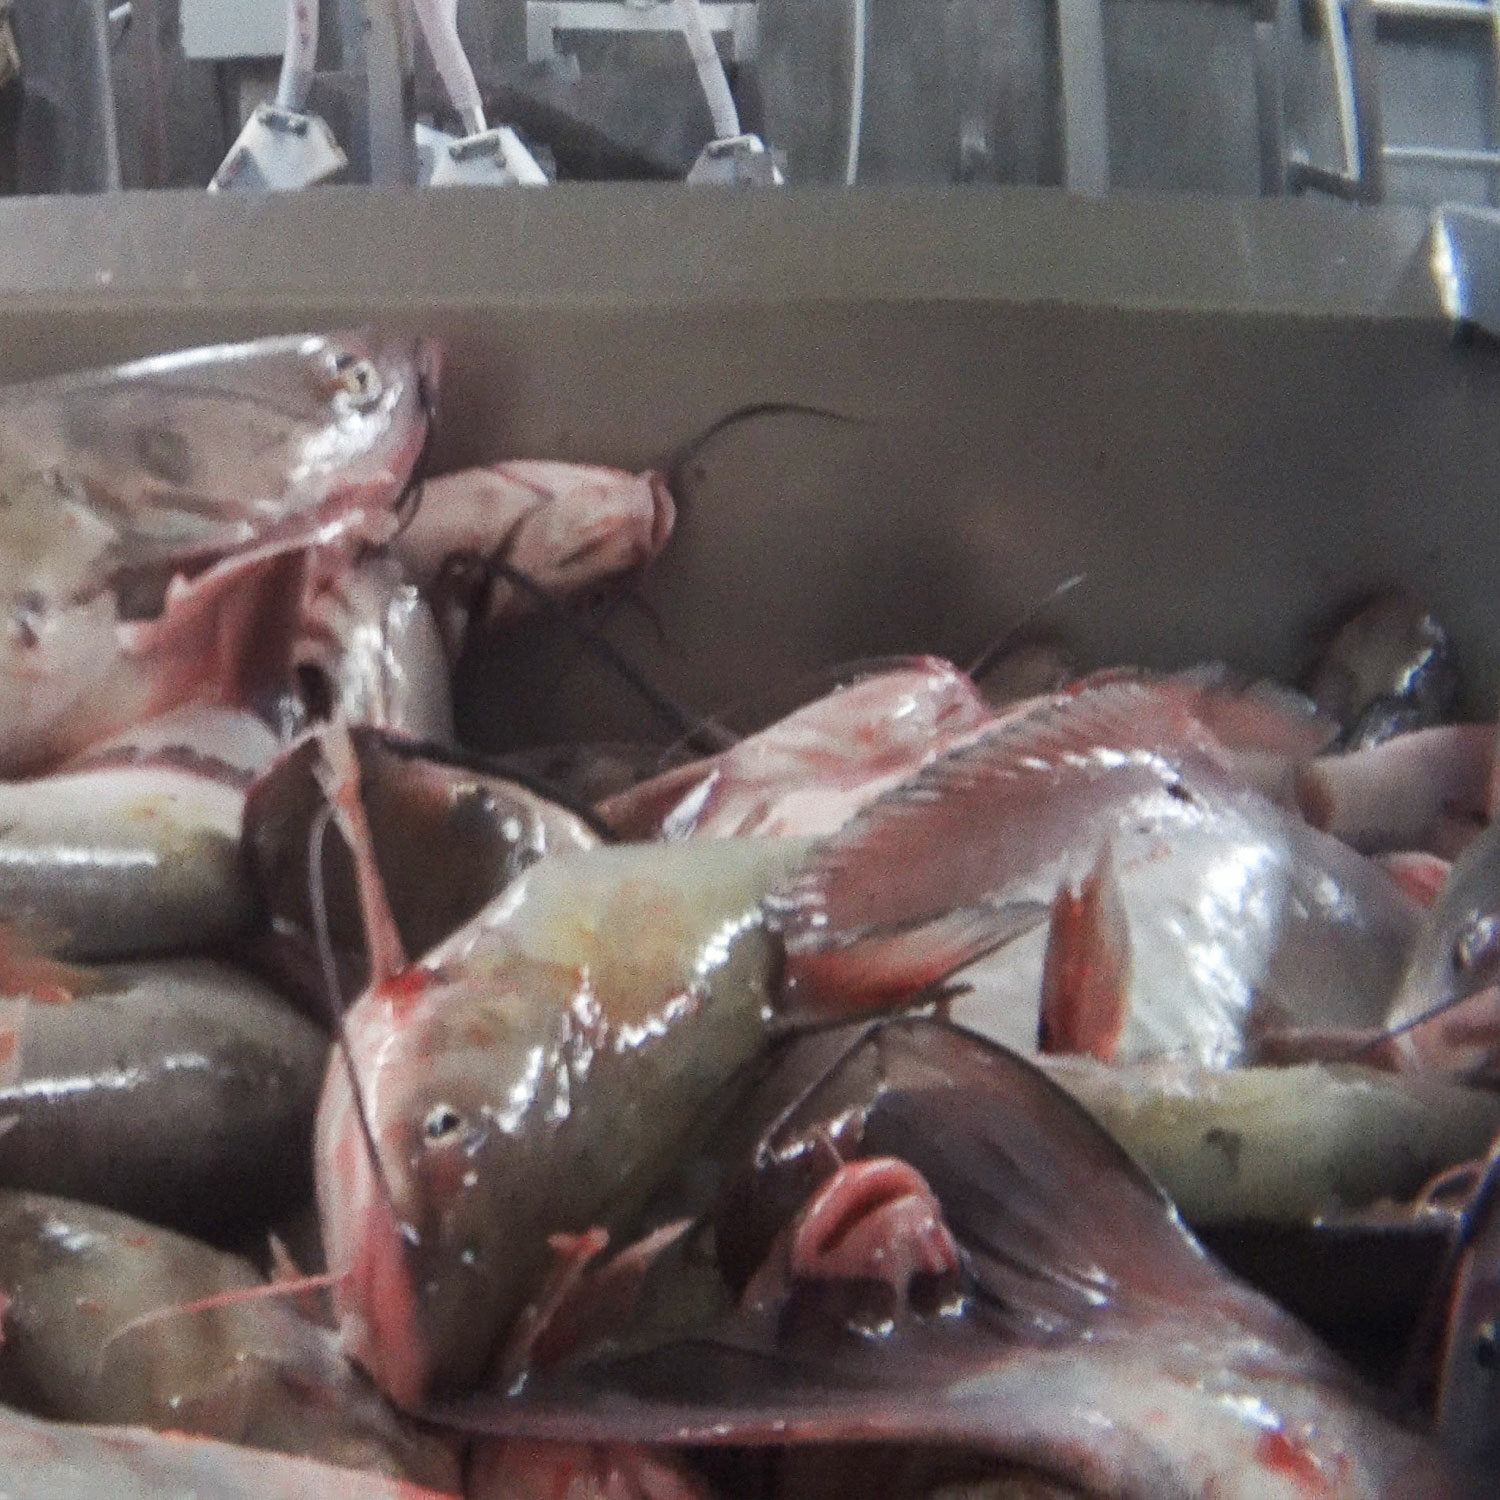 gasping catfish on slaughterhouse conveyor